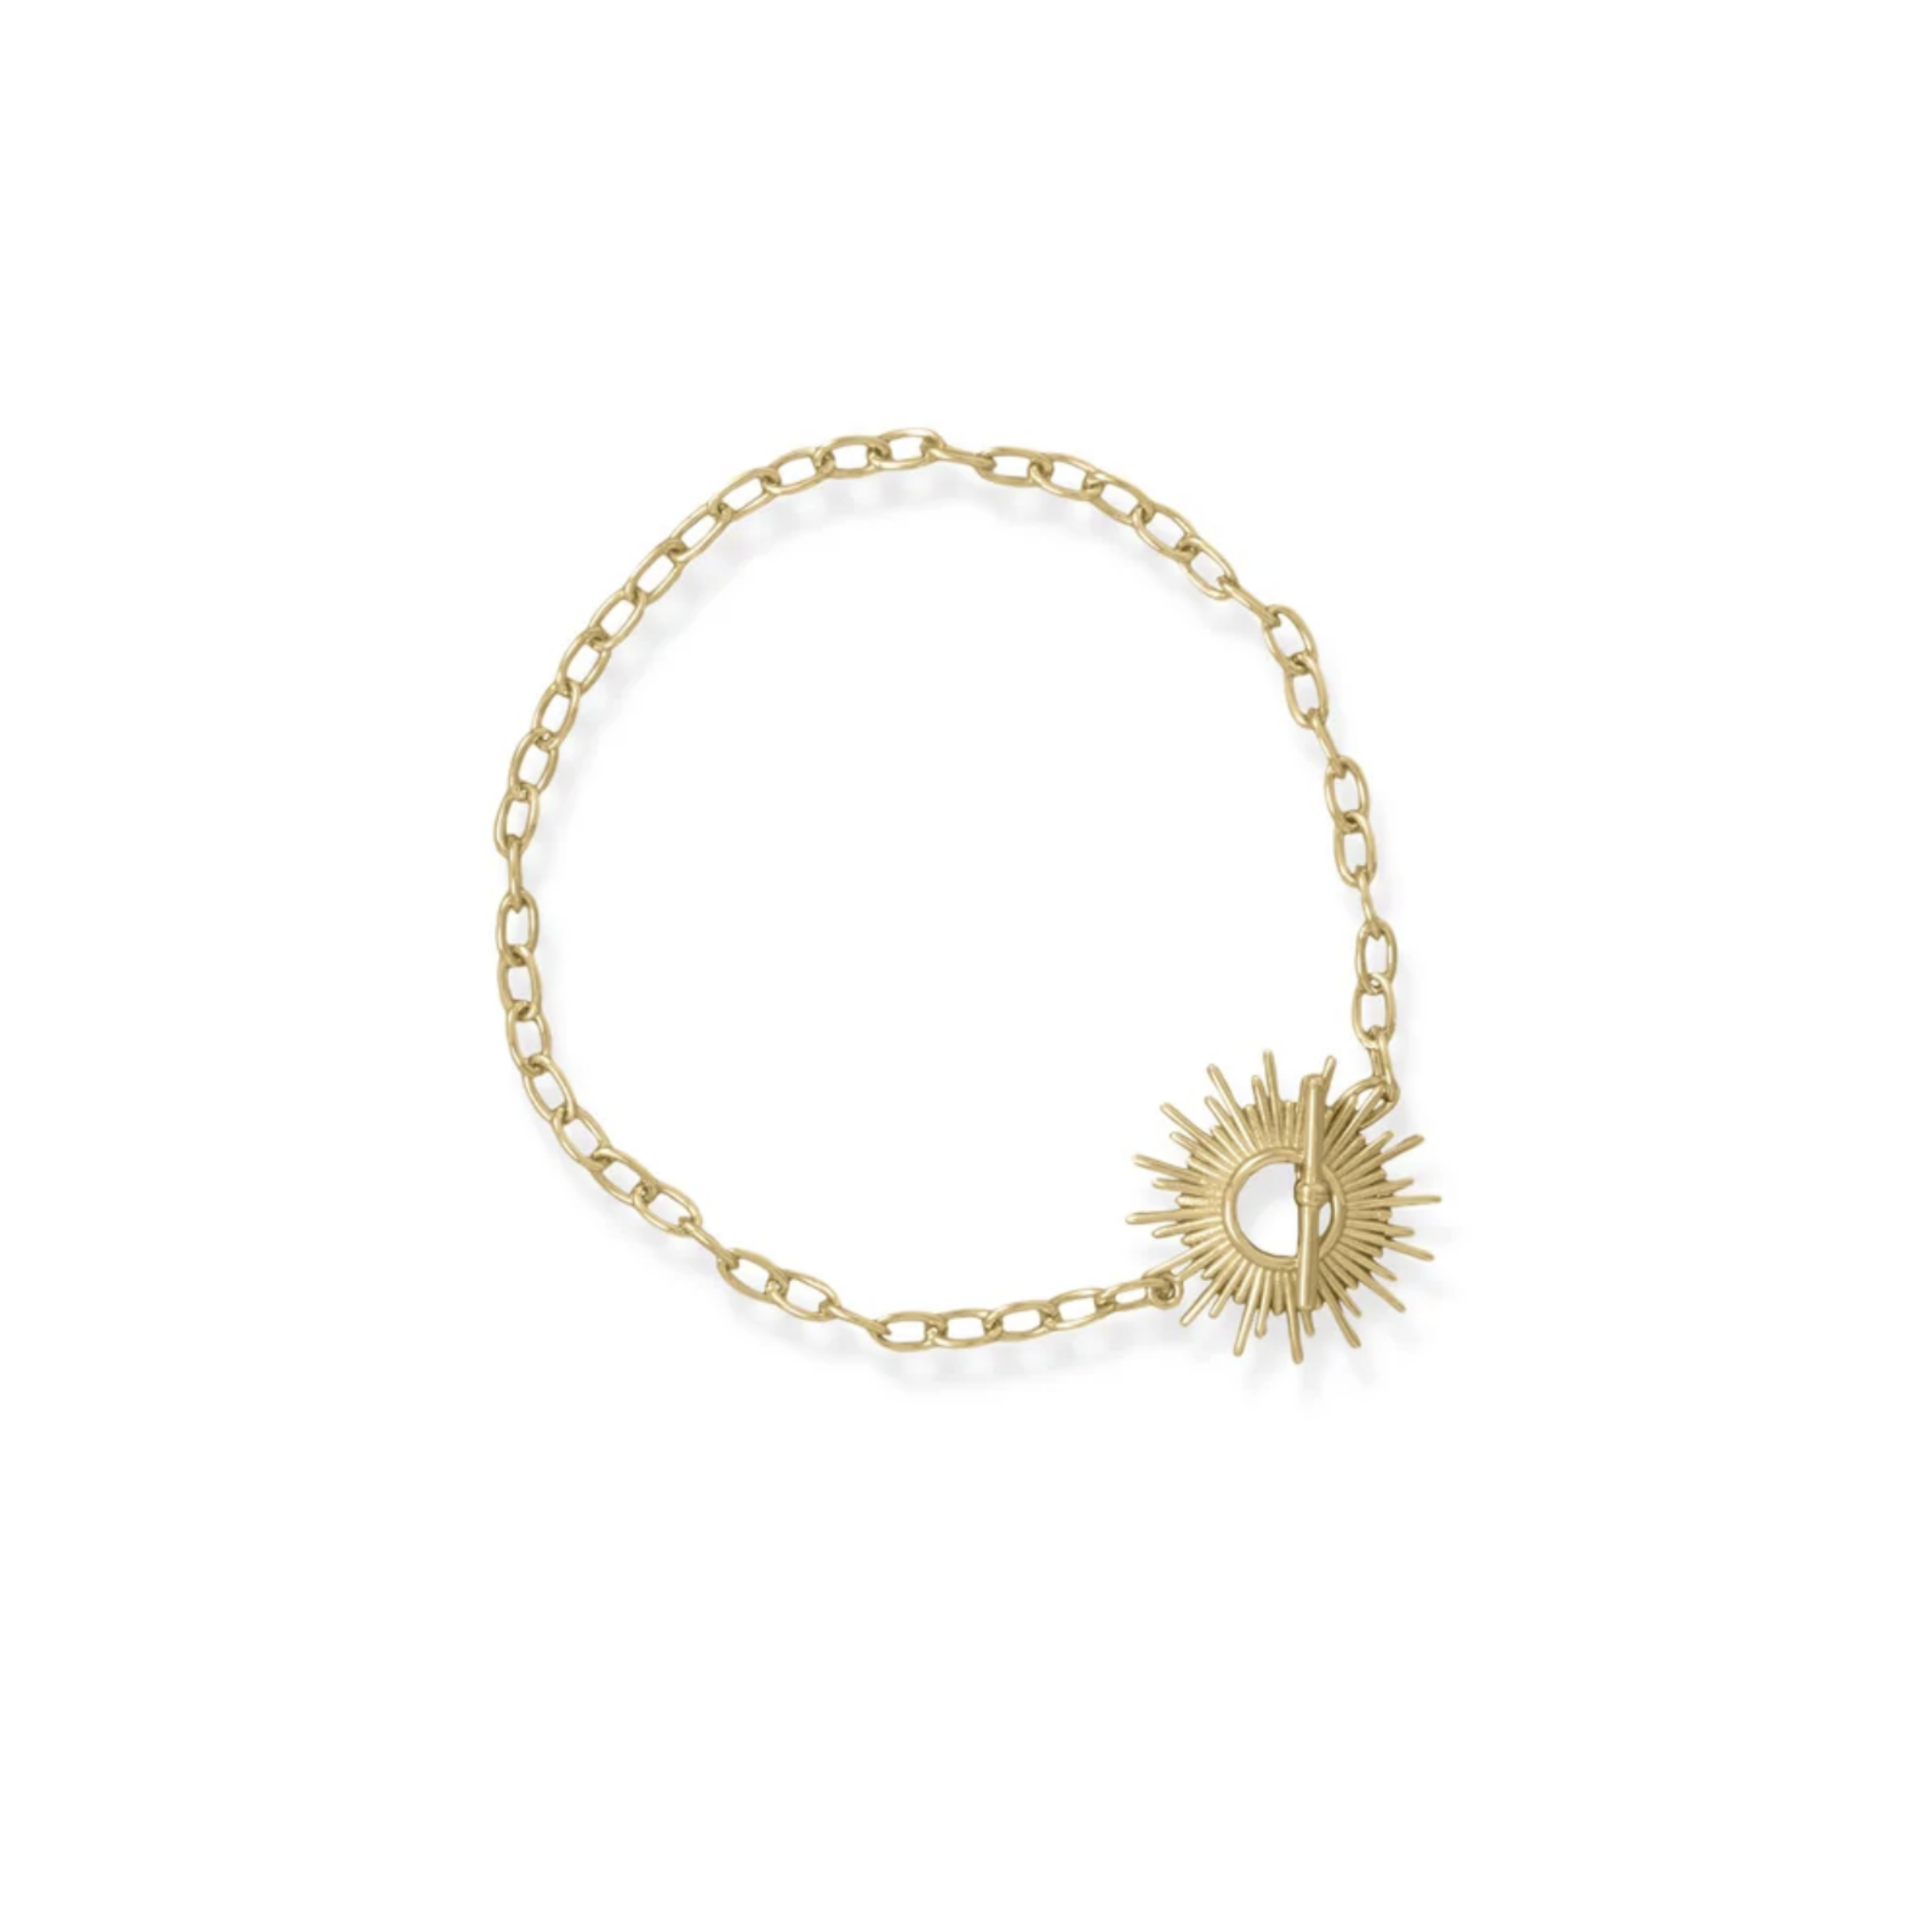 Shine On! 14 Karat Gold Plated Sunburst Toggle Bracelet